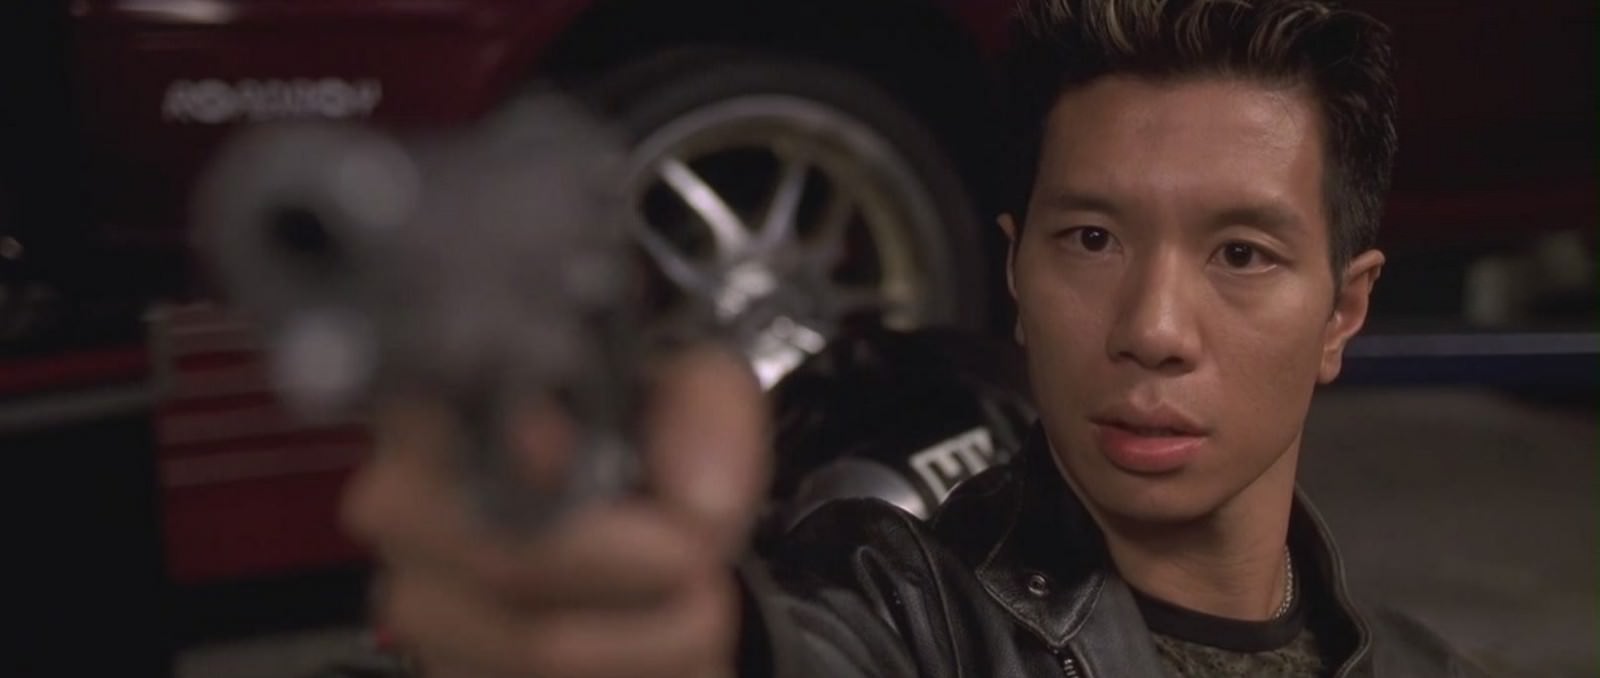 Movie, The Fast and the Furious(美國, 2001年) / 玩命關頭(台灣) / 狂野時速(香港) / 速度与激情(網路), 電影角色與演員介紹